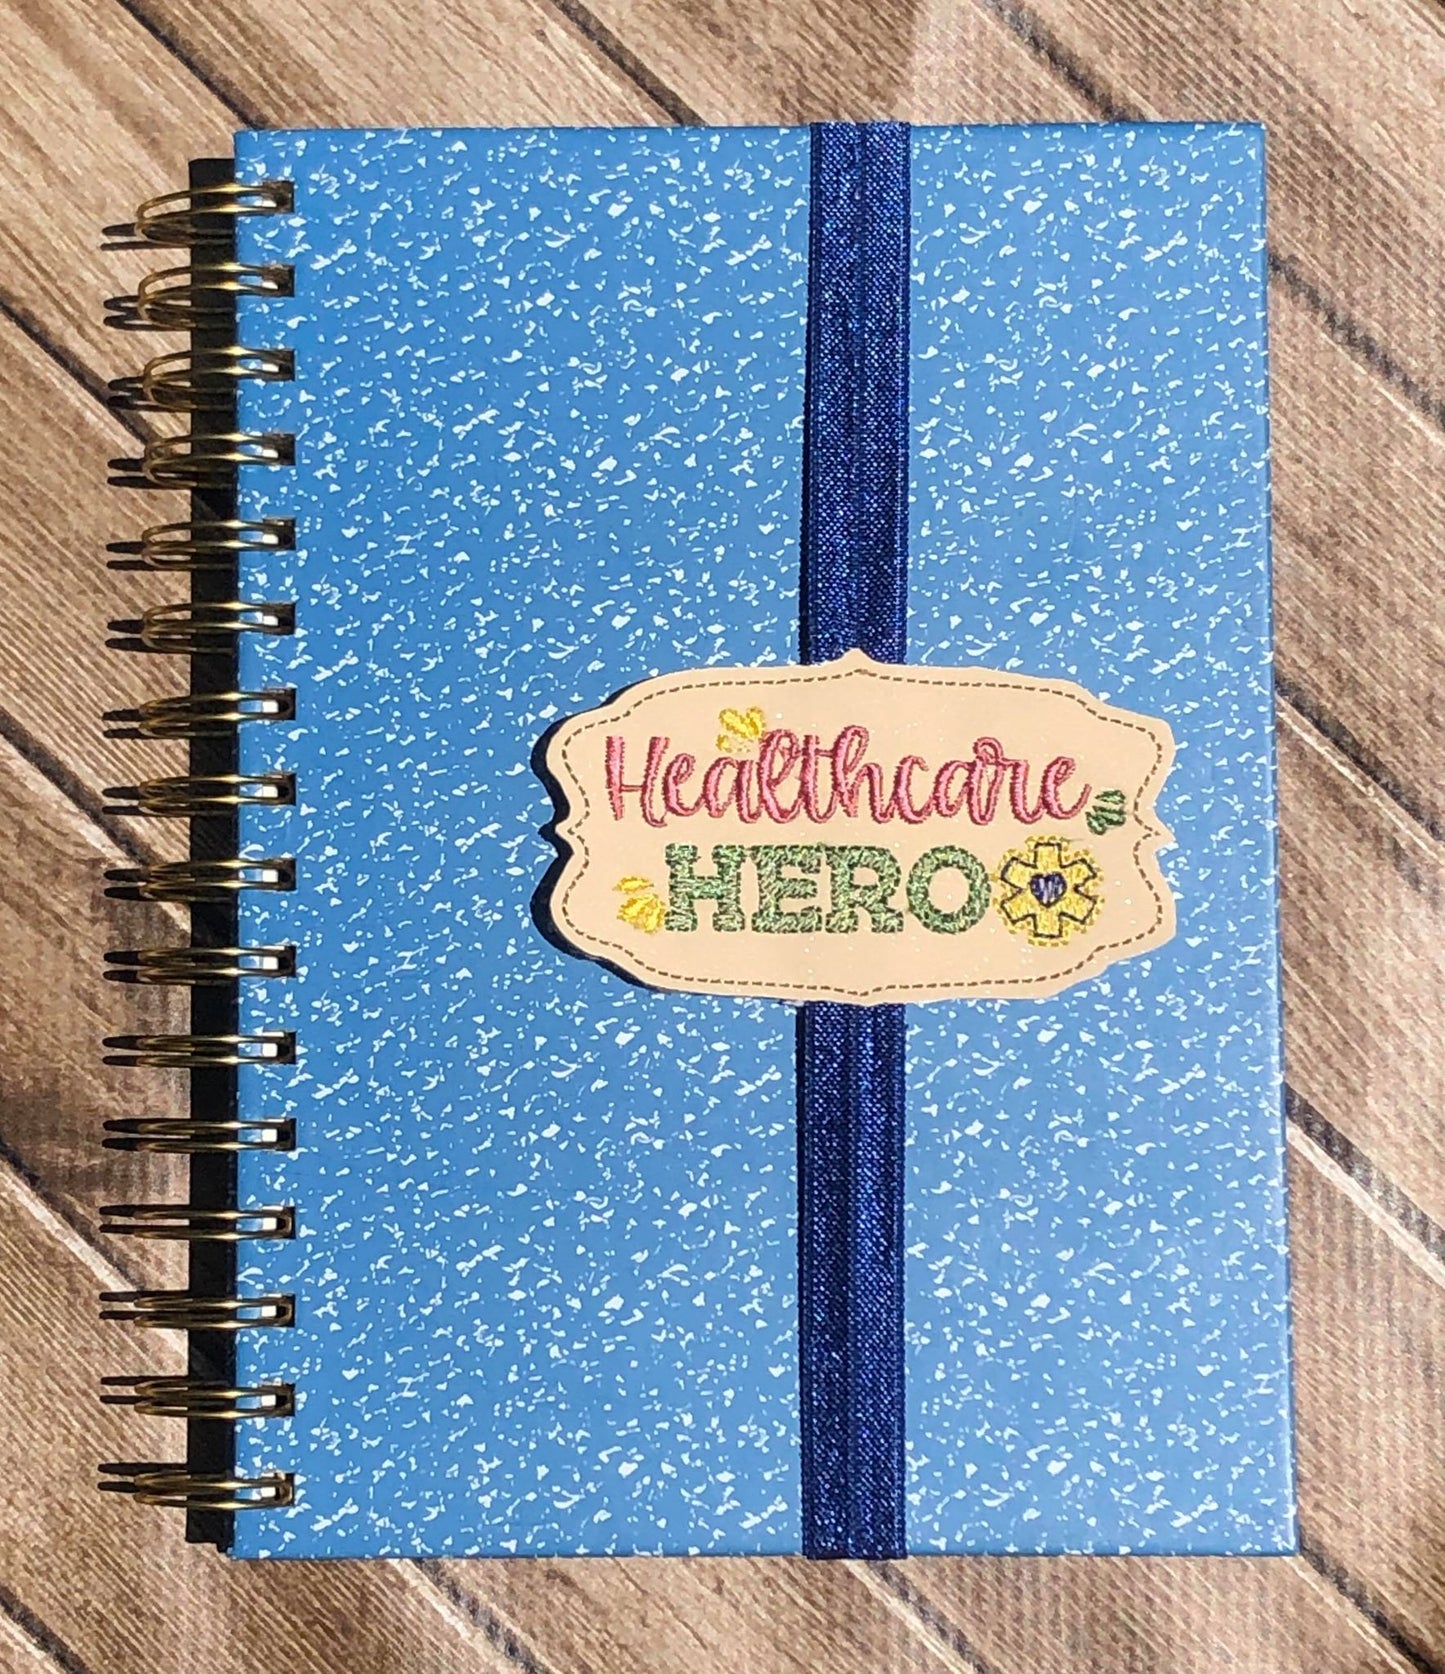 Healthcare Hero Book Band - Digital Embroidery Design